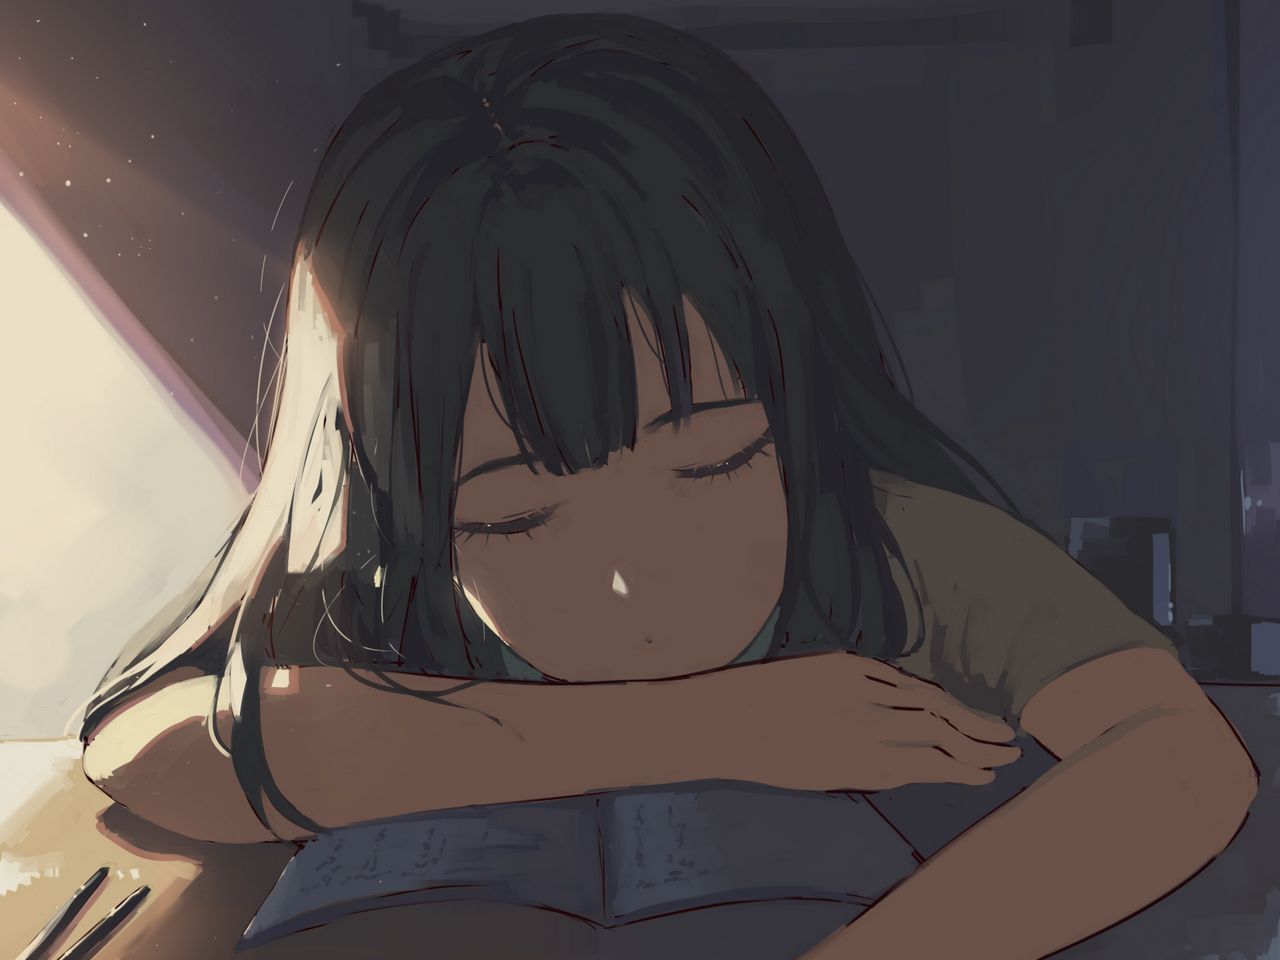 Download wallpaper x girl sleep study anime standard hd background